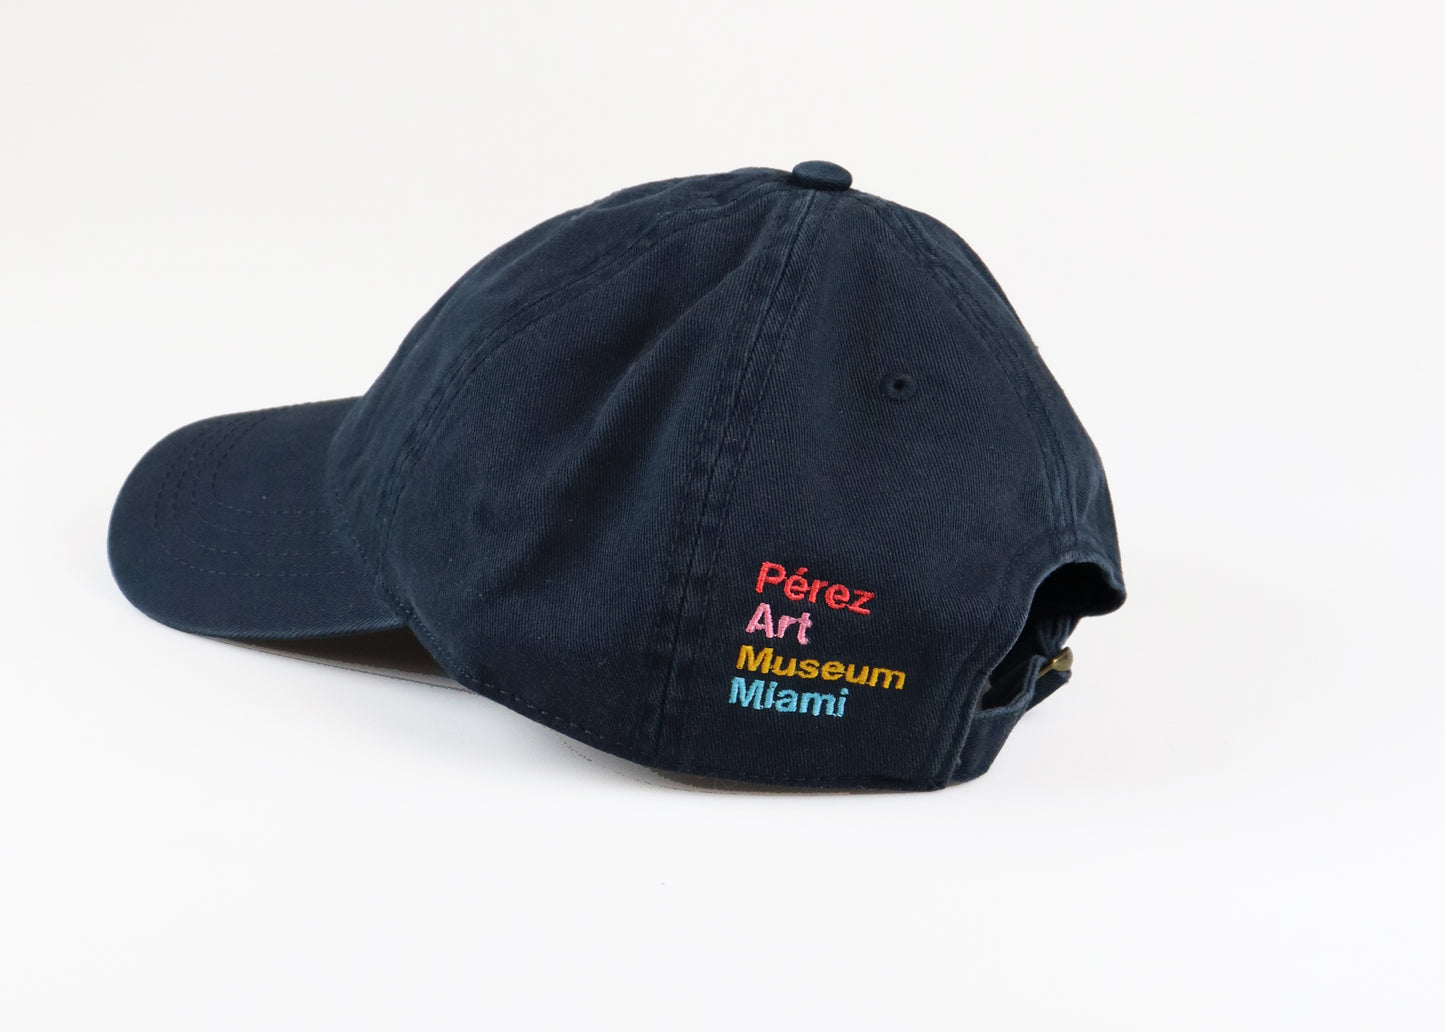 PAMM Hat: Navy/Multicolor